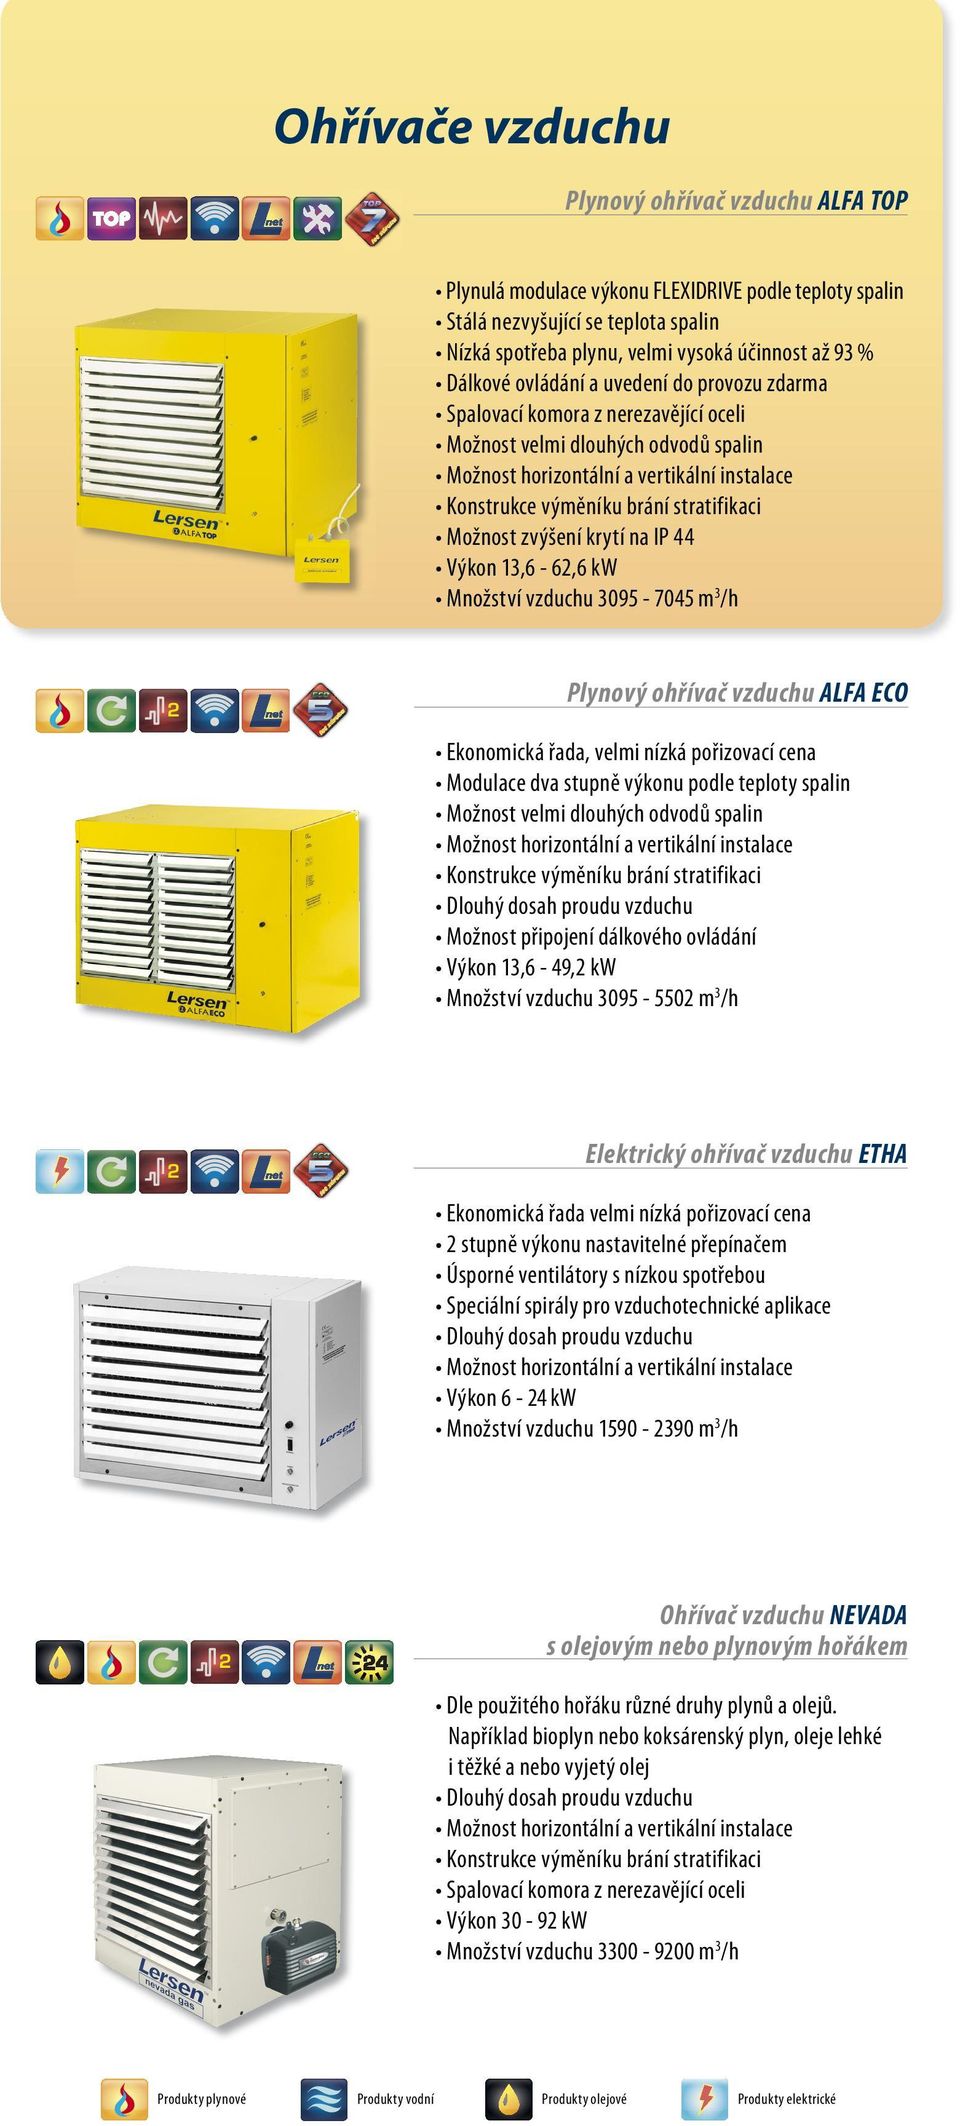 Ohřívač vzduchu NEVADA - PDF Free Download